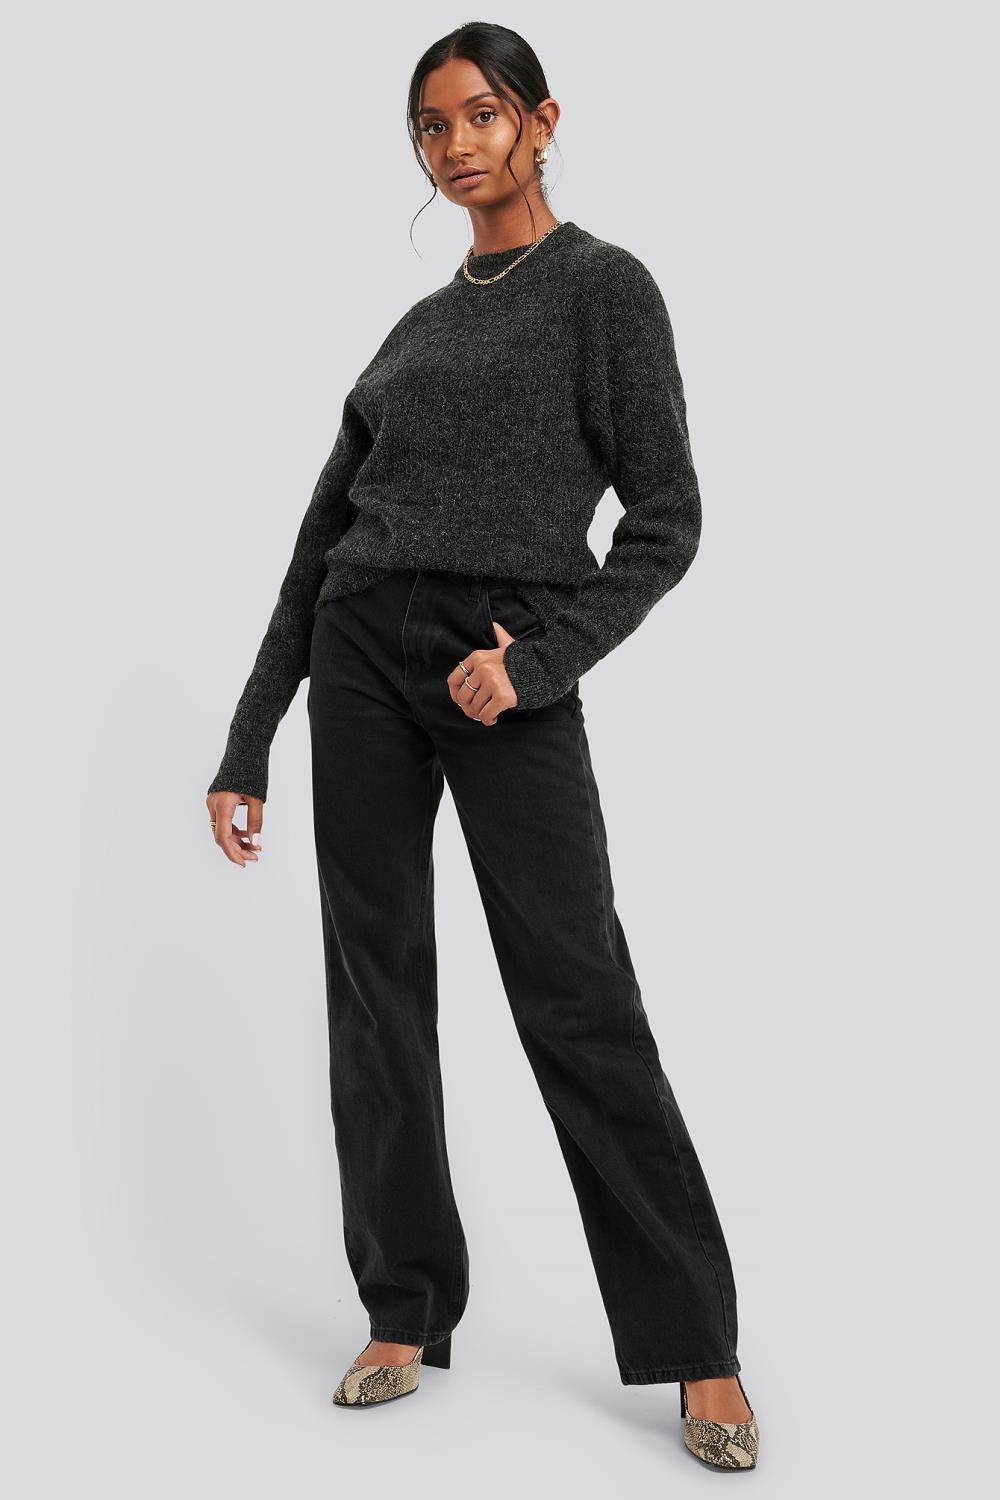 NA-KD wool blend ragland sleeve sweater, grå strikkegenser